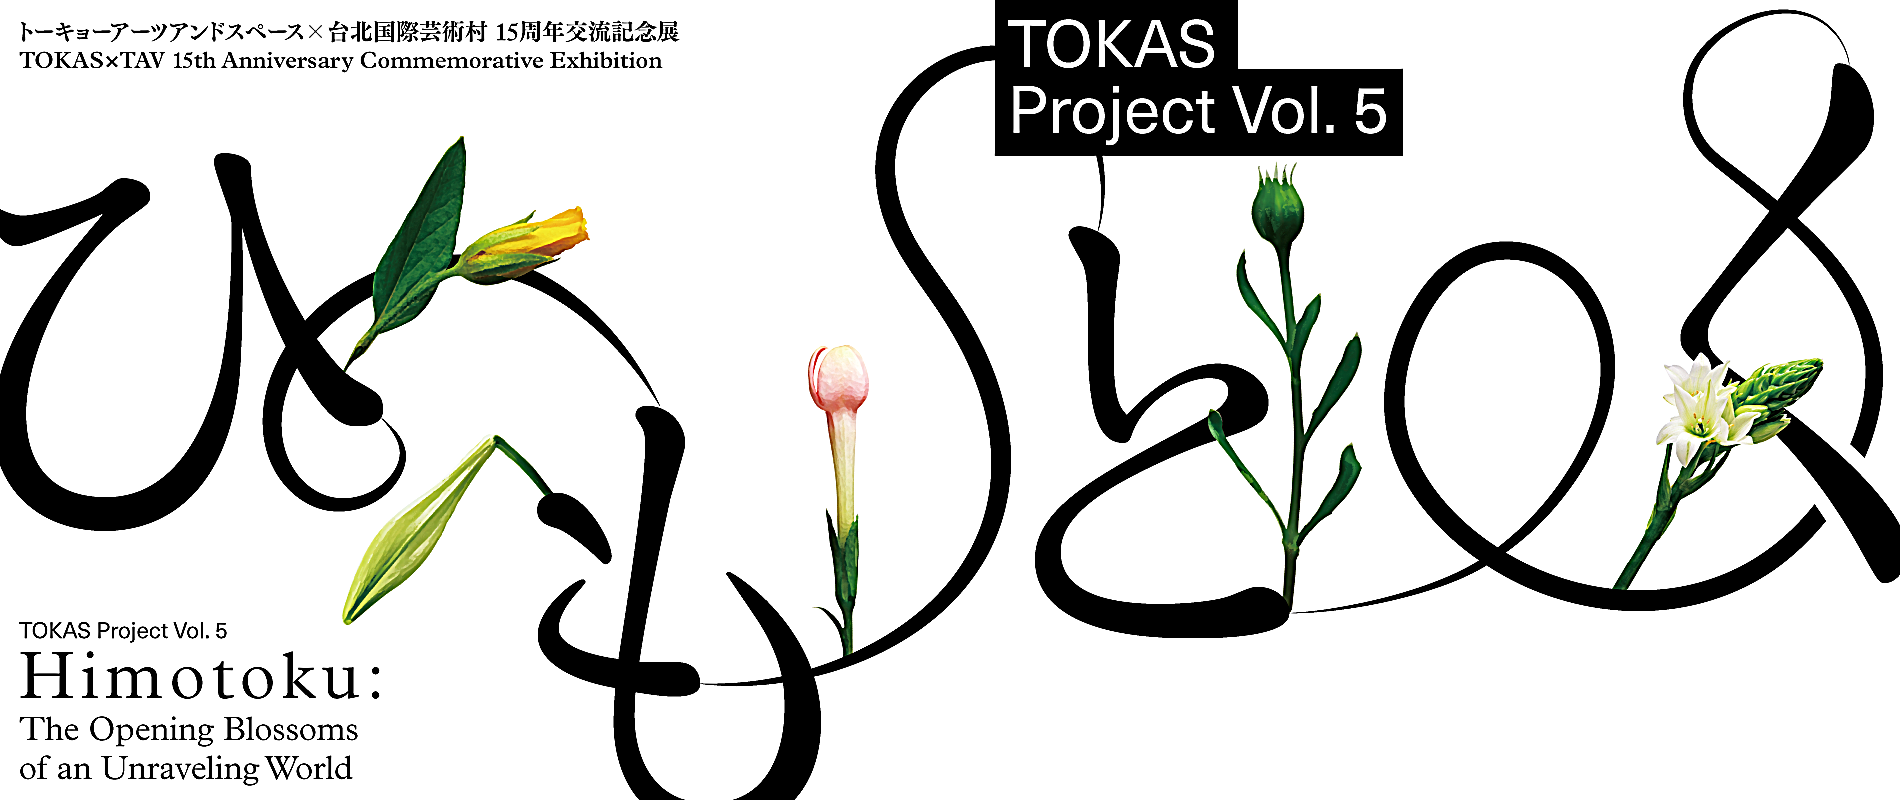 TOKAS Project Vol. 5